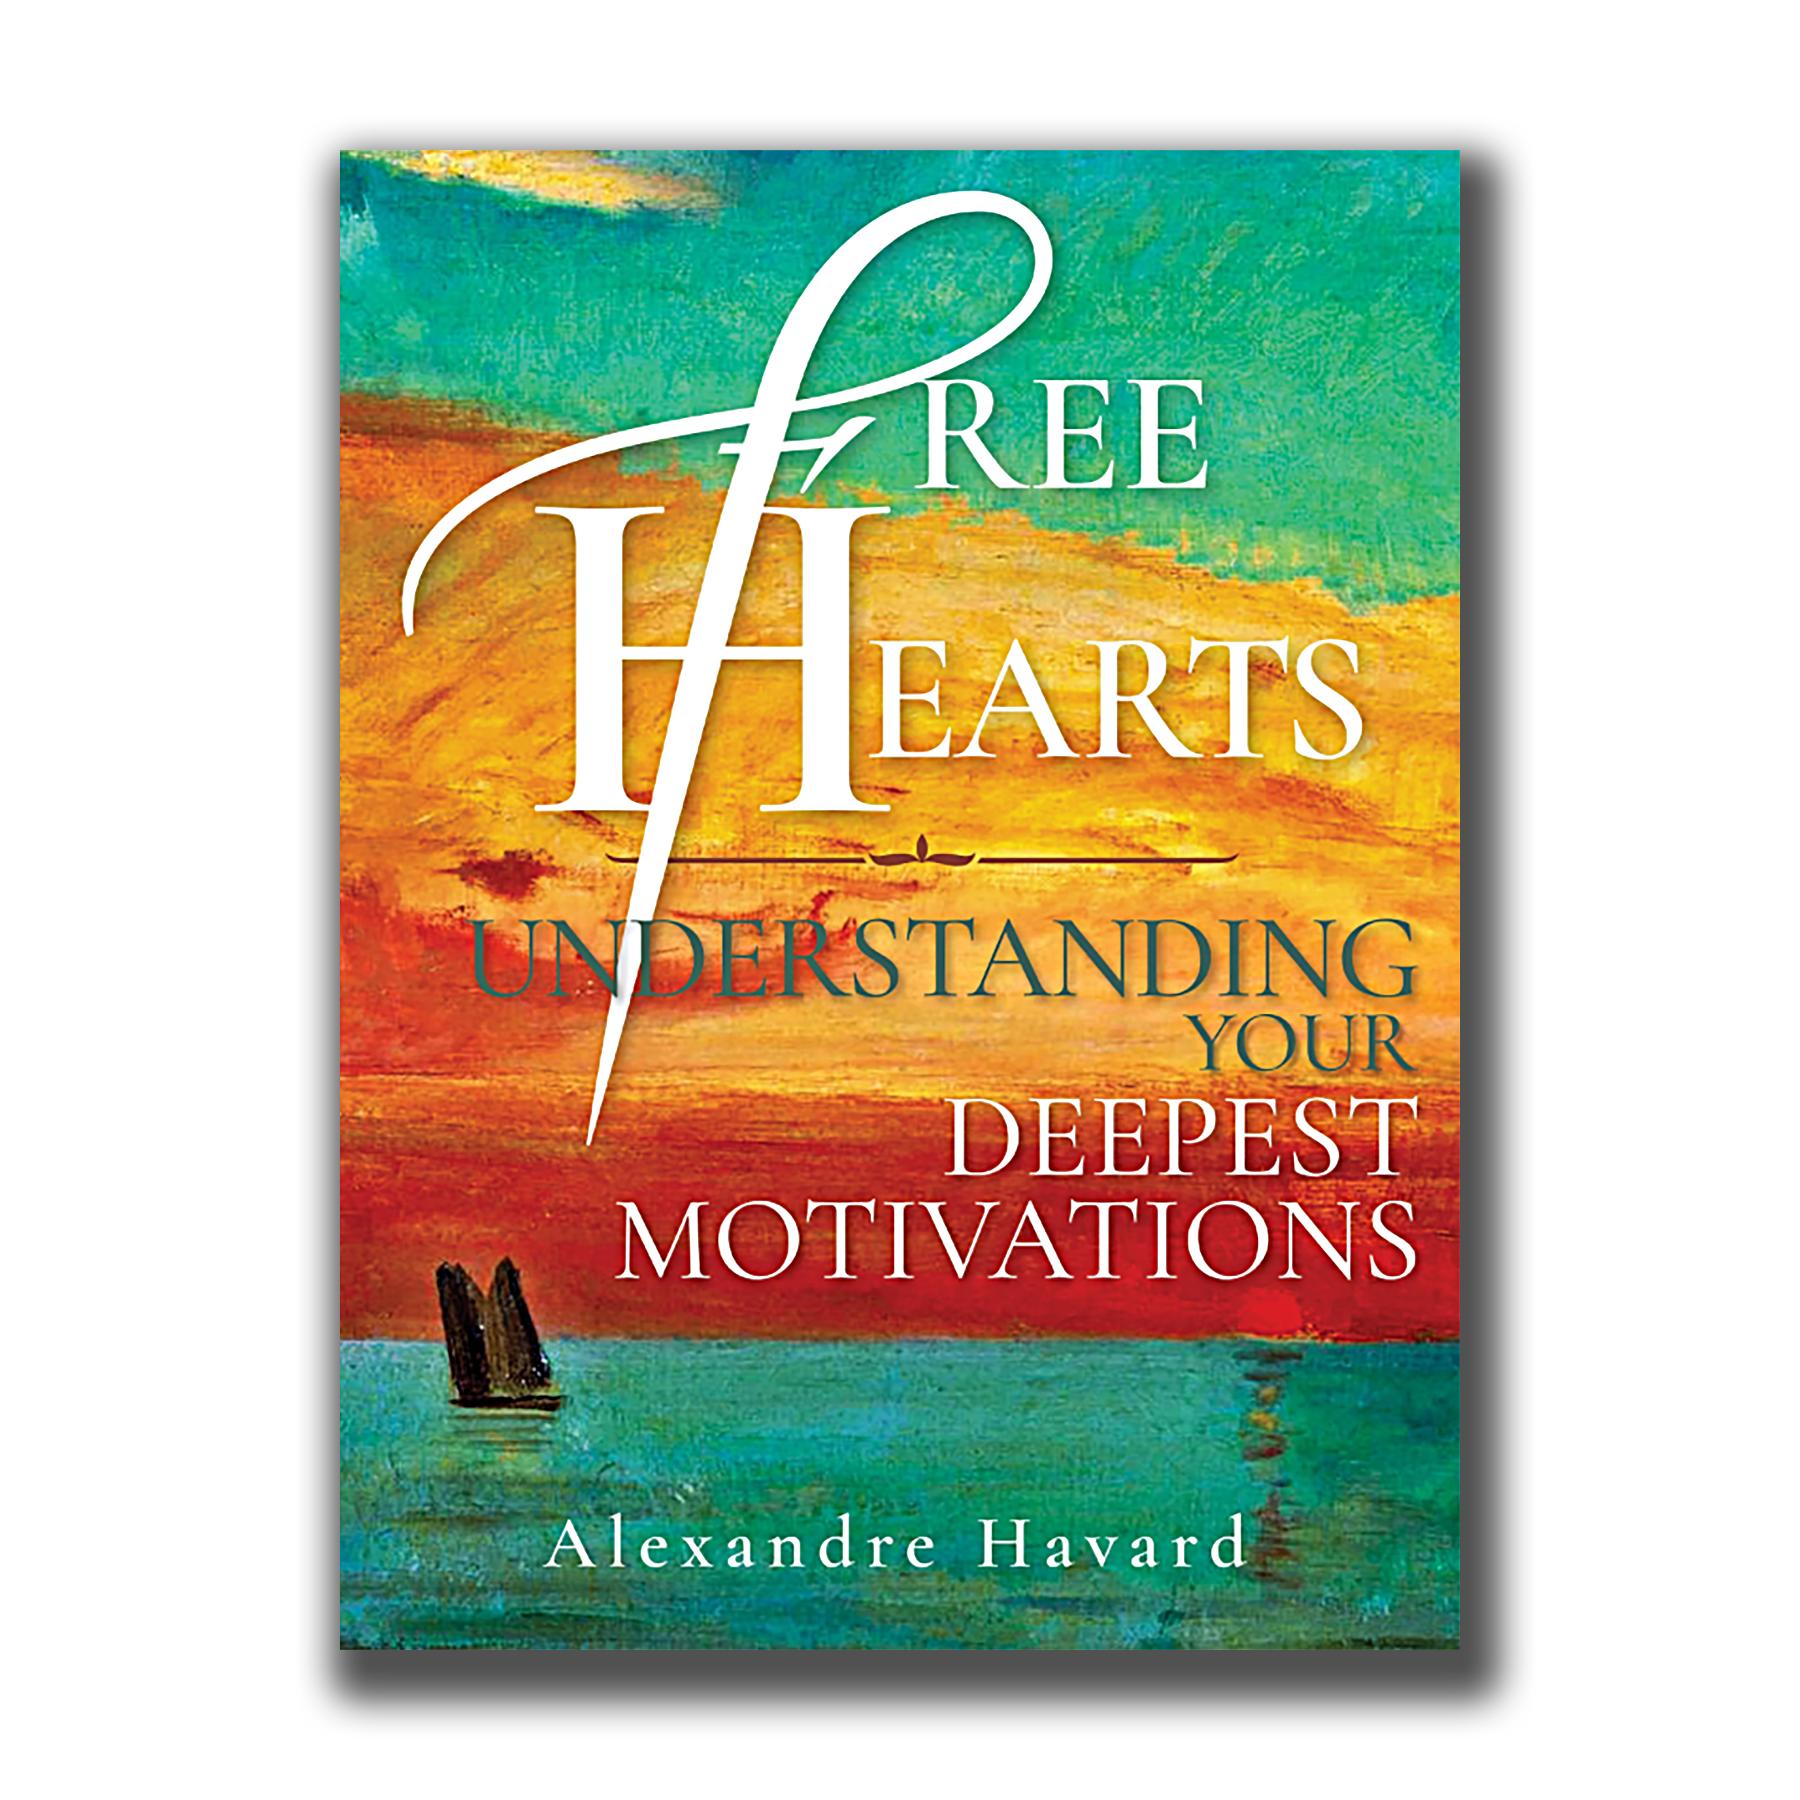 Free Hearts: Understanding Your Deepest Motivations